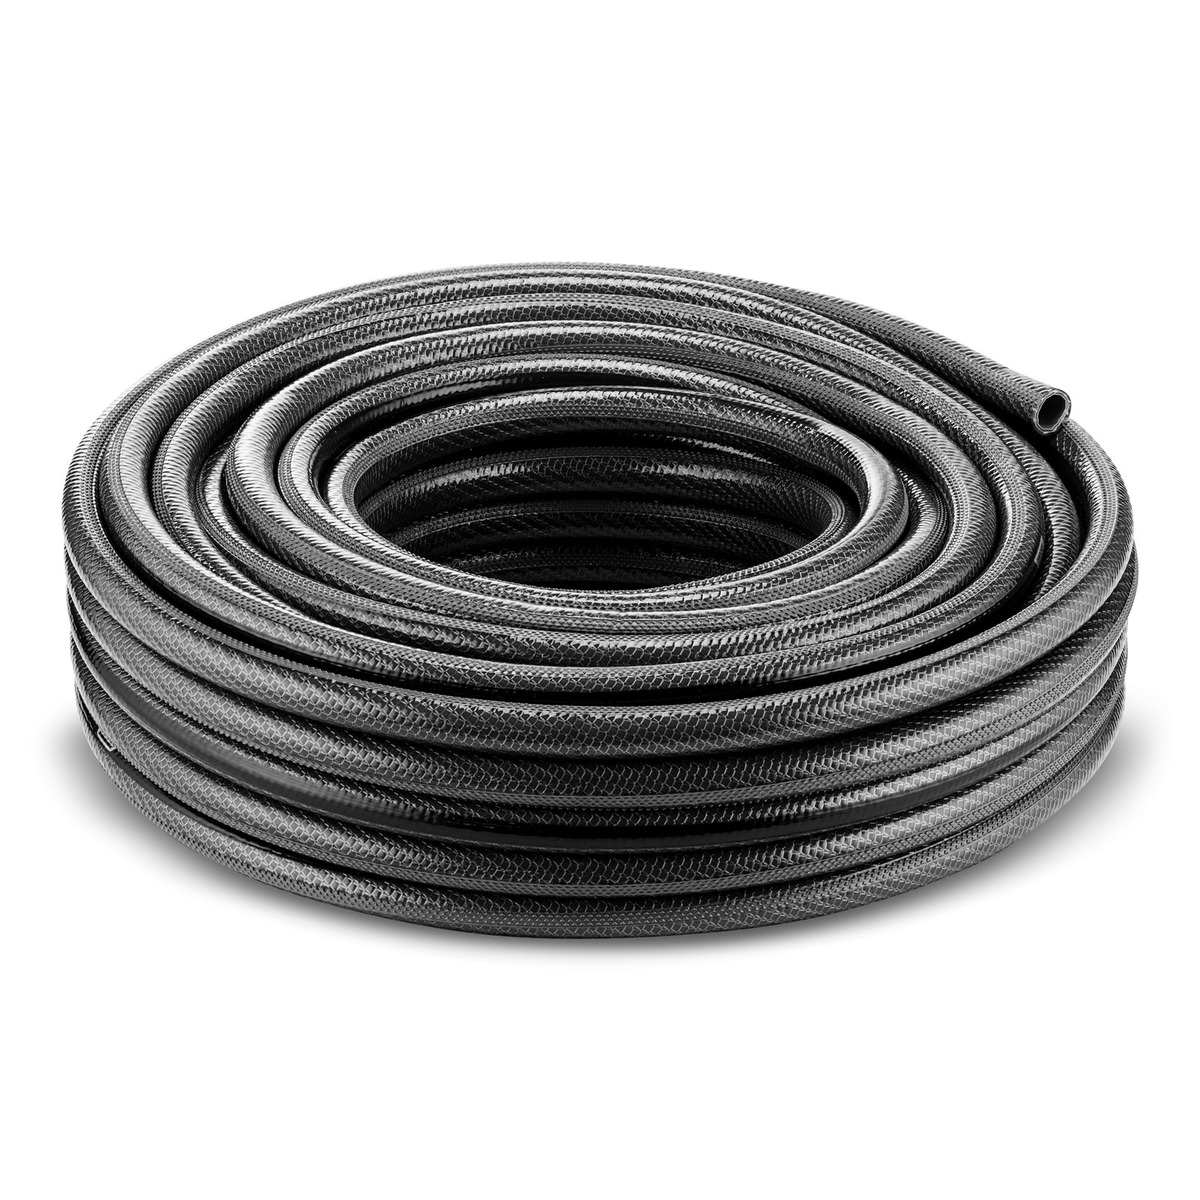 Kärcher Performance Premium hose, 1/2" -20 m